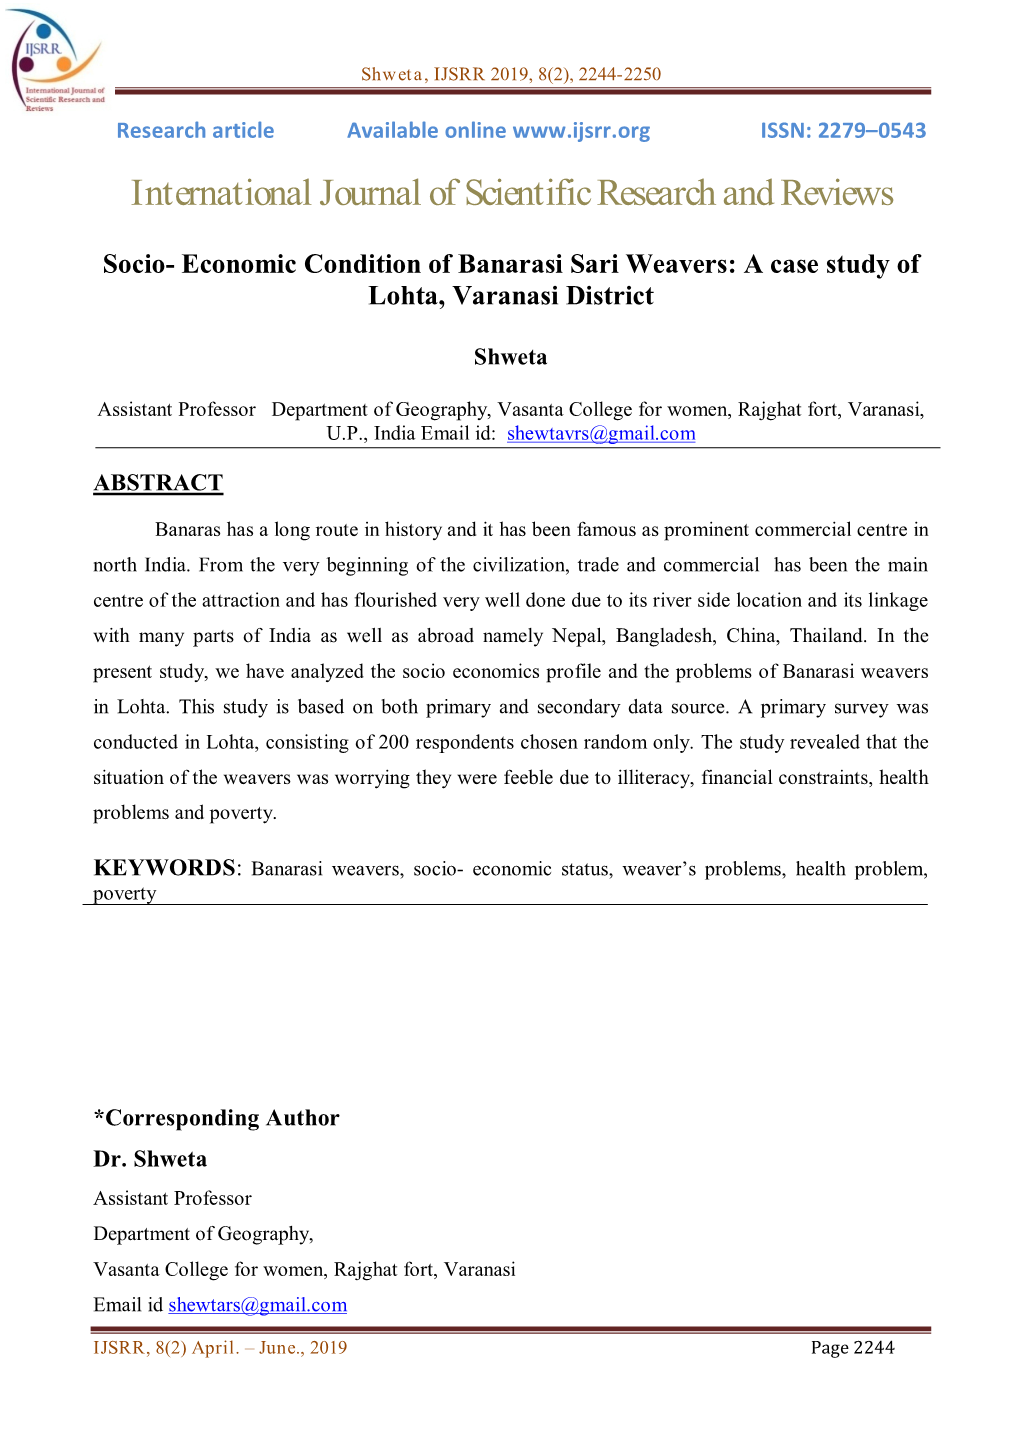 Socio- Economic Condition of Banarasi Sari Weavers: a Case Study of Lohta, Varanasi District